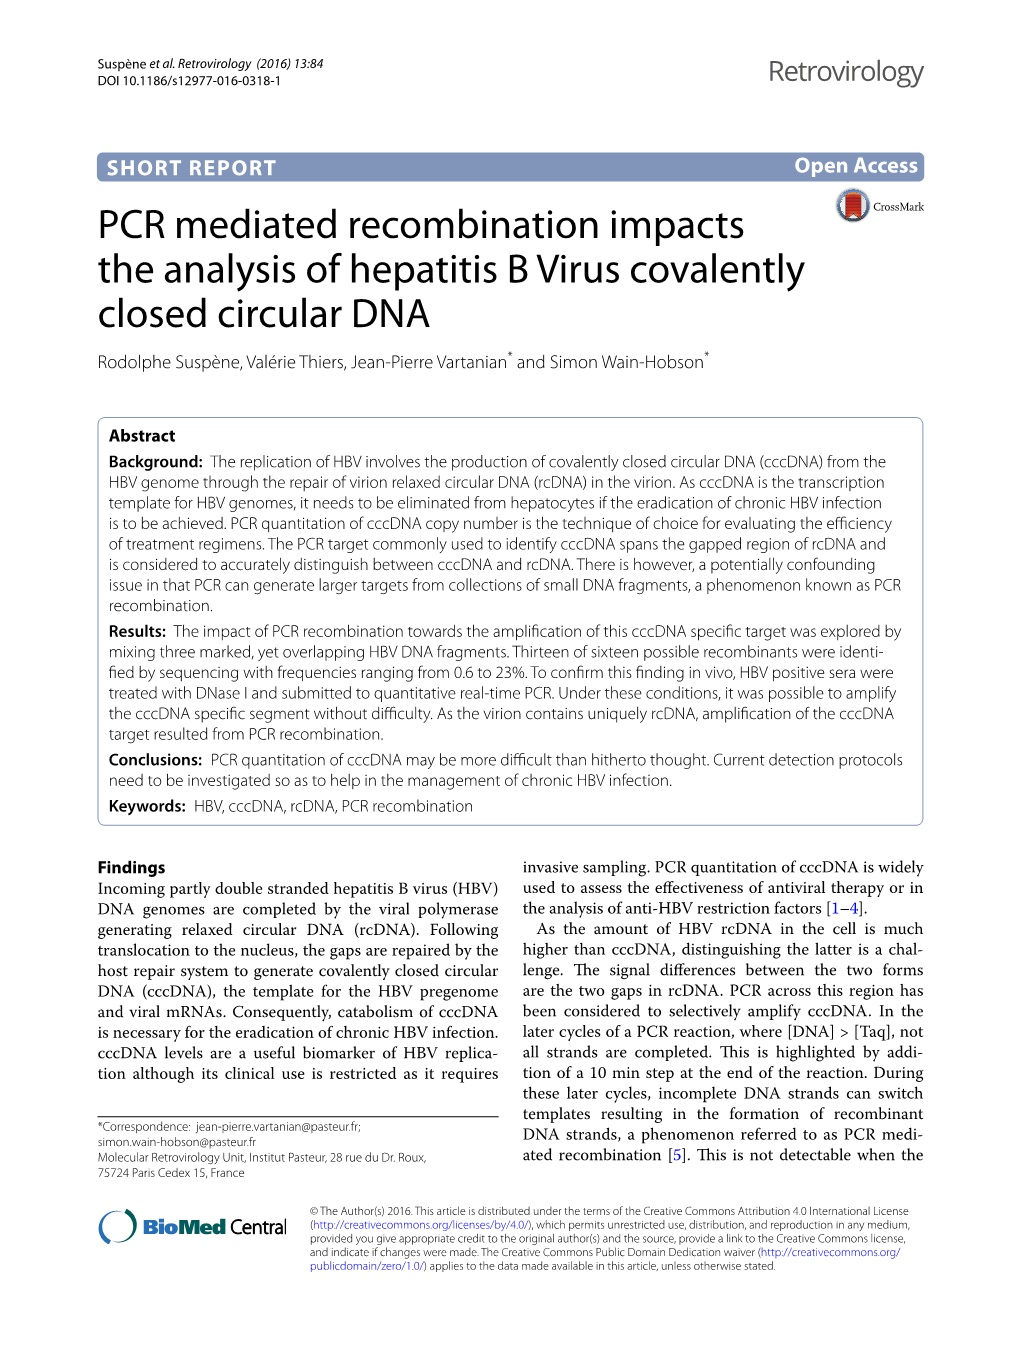 PCR Mediated Recombination Impacts the Analysis of Hepatitis B Virus